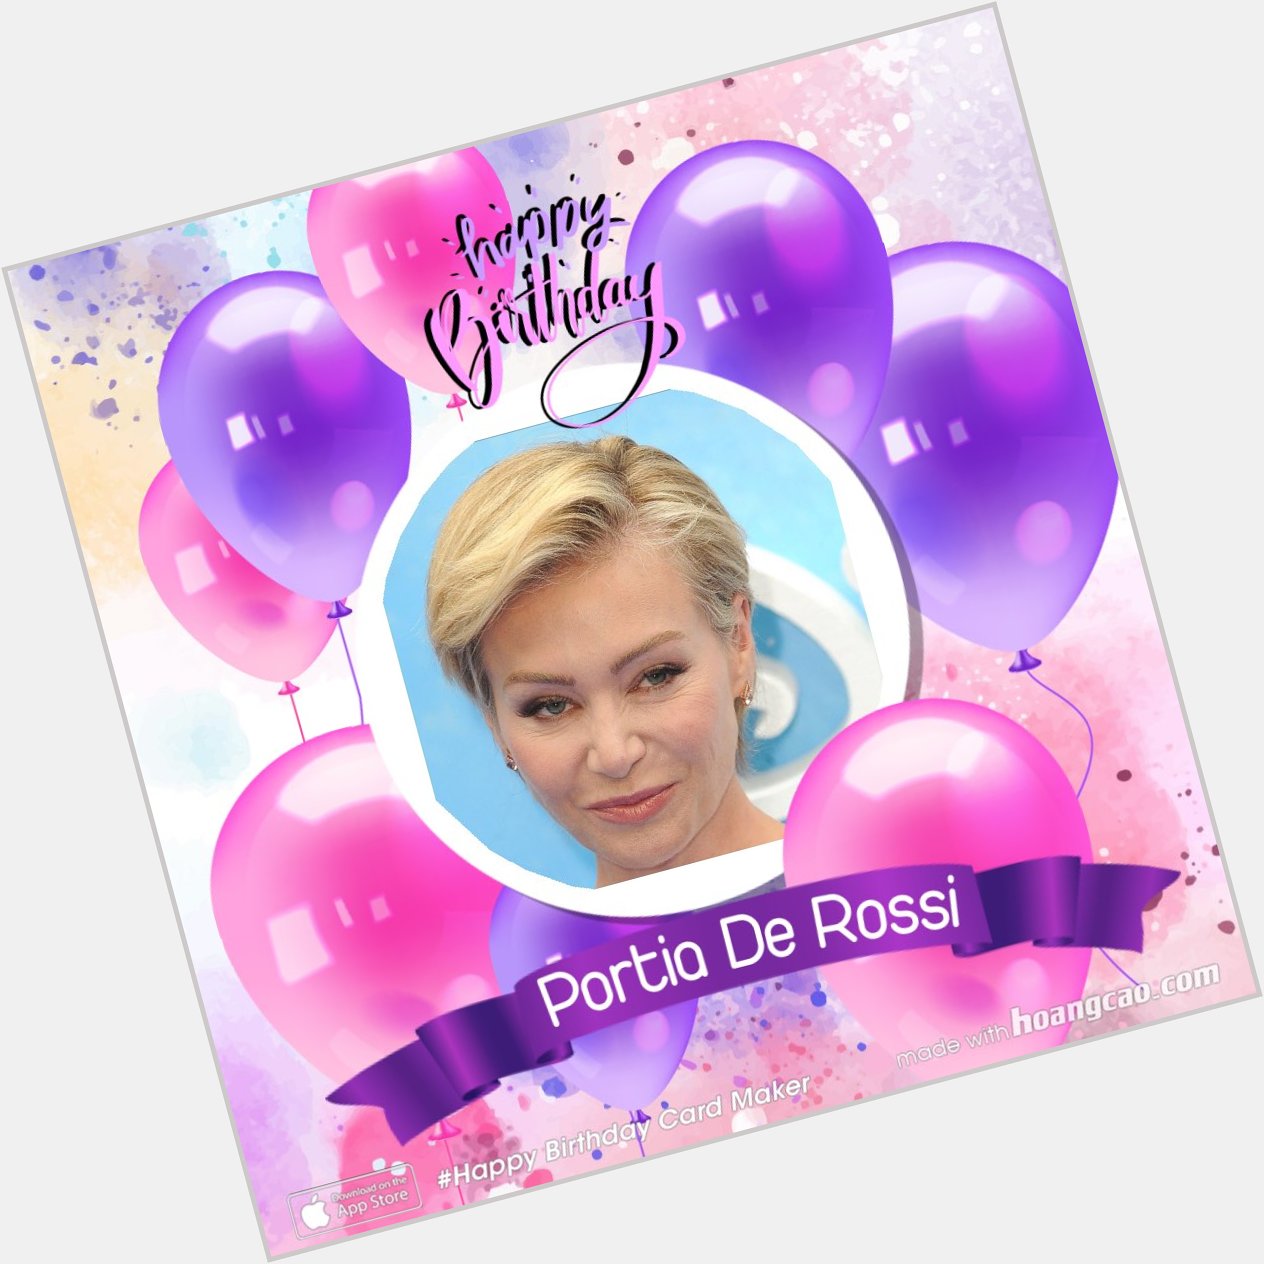  Happy 48 Birthday Portia de Rossi 